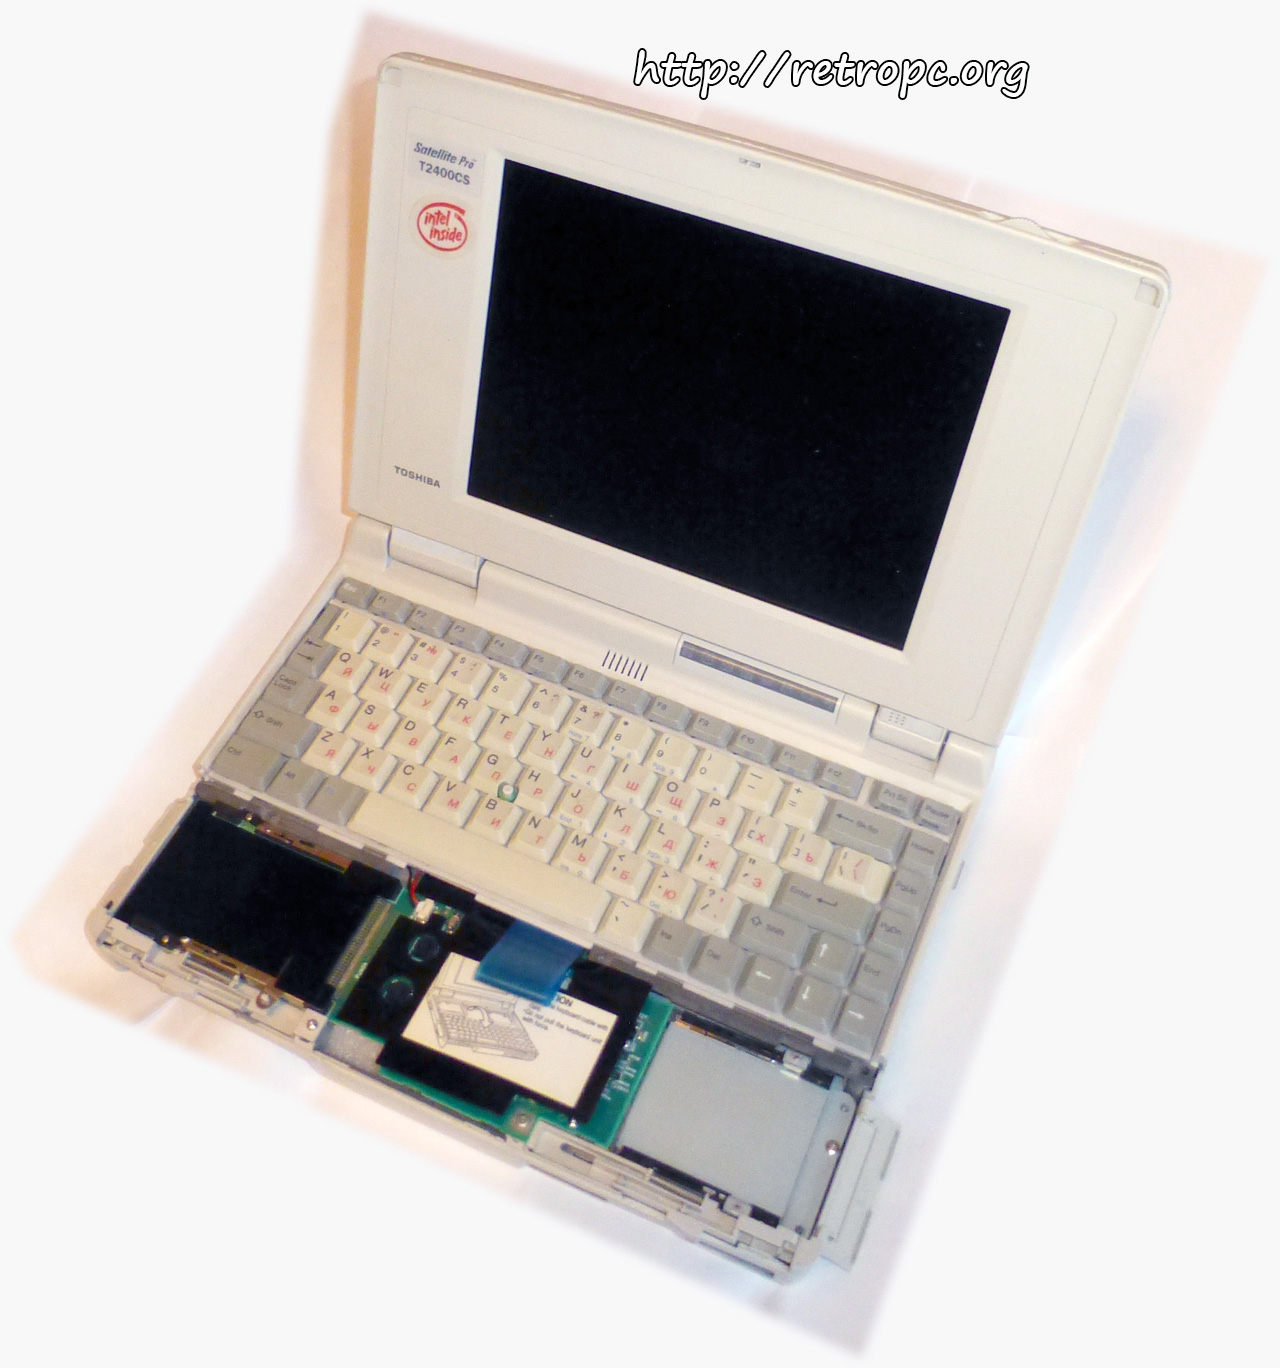 Ноутбук Toshiba Satellite Pro T2400CS-250 со снятой подложкой под руки с двумя кнопками